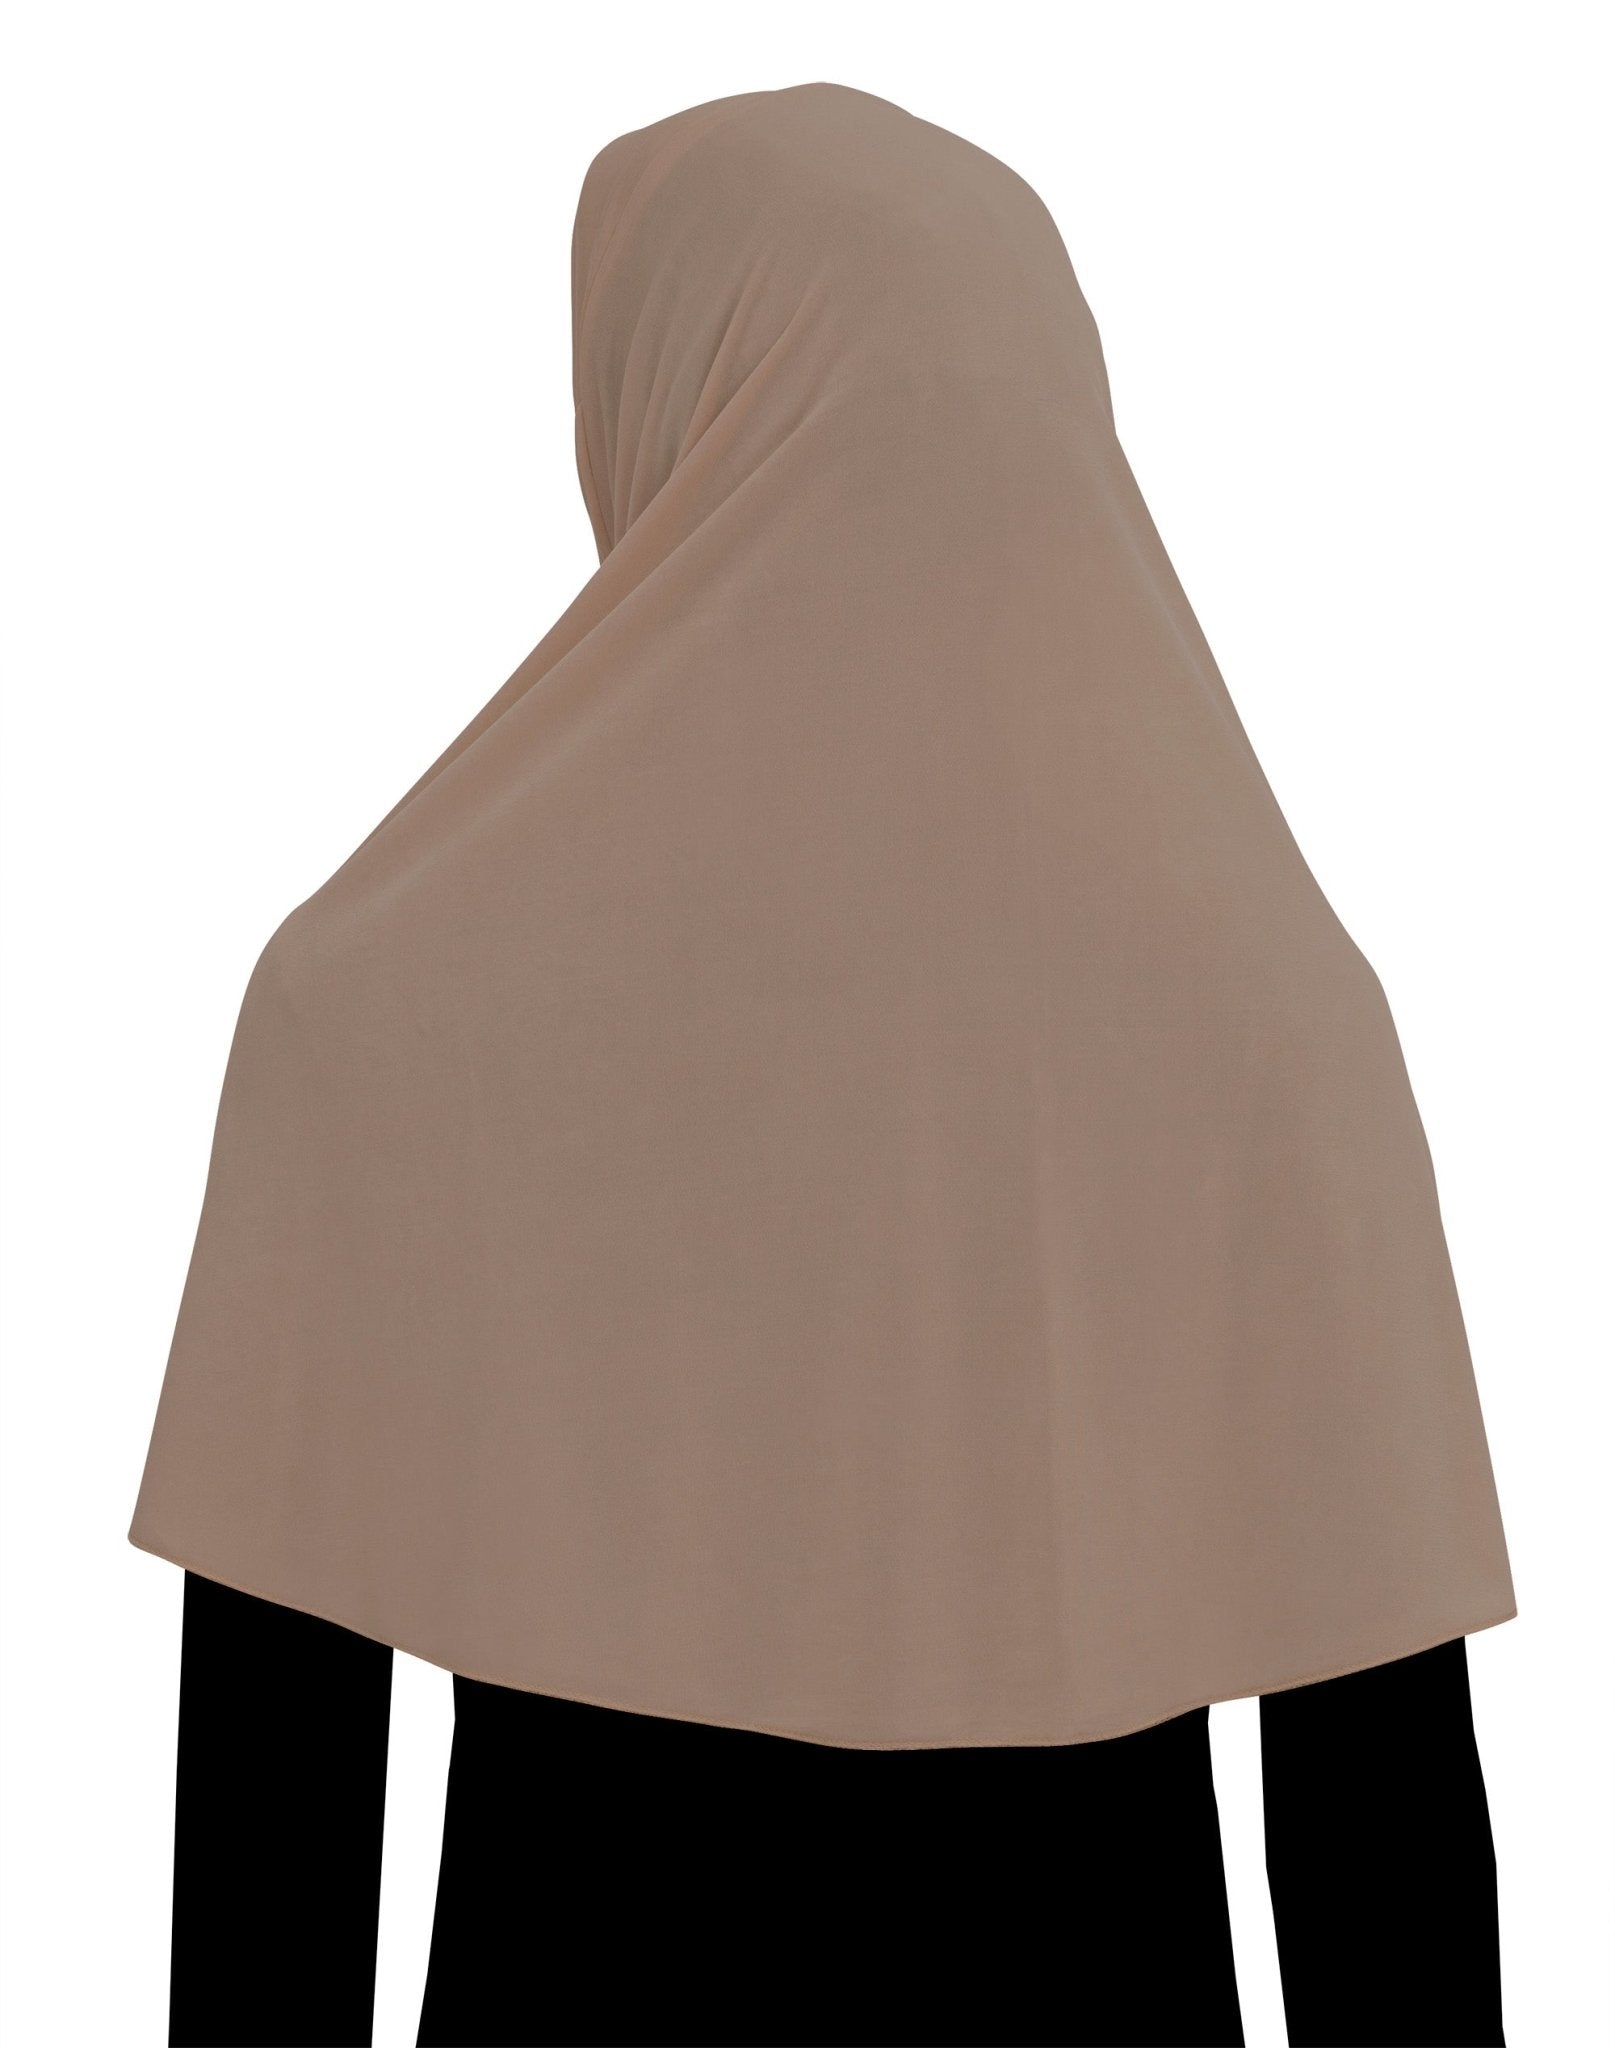 elbow length khimar hijab for women in tan light brown khaki 